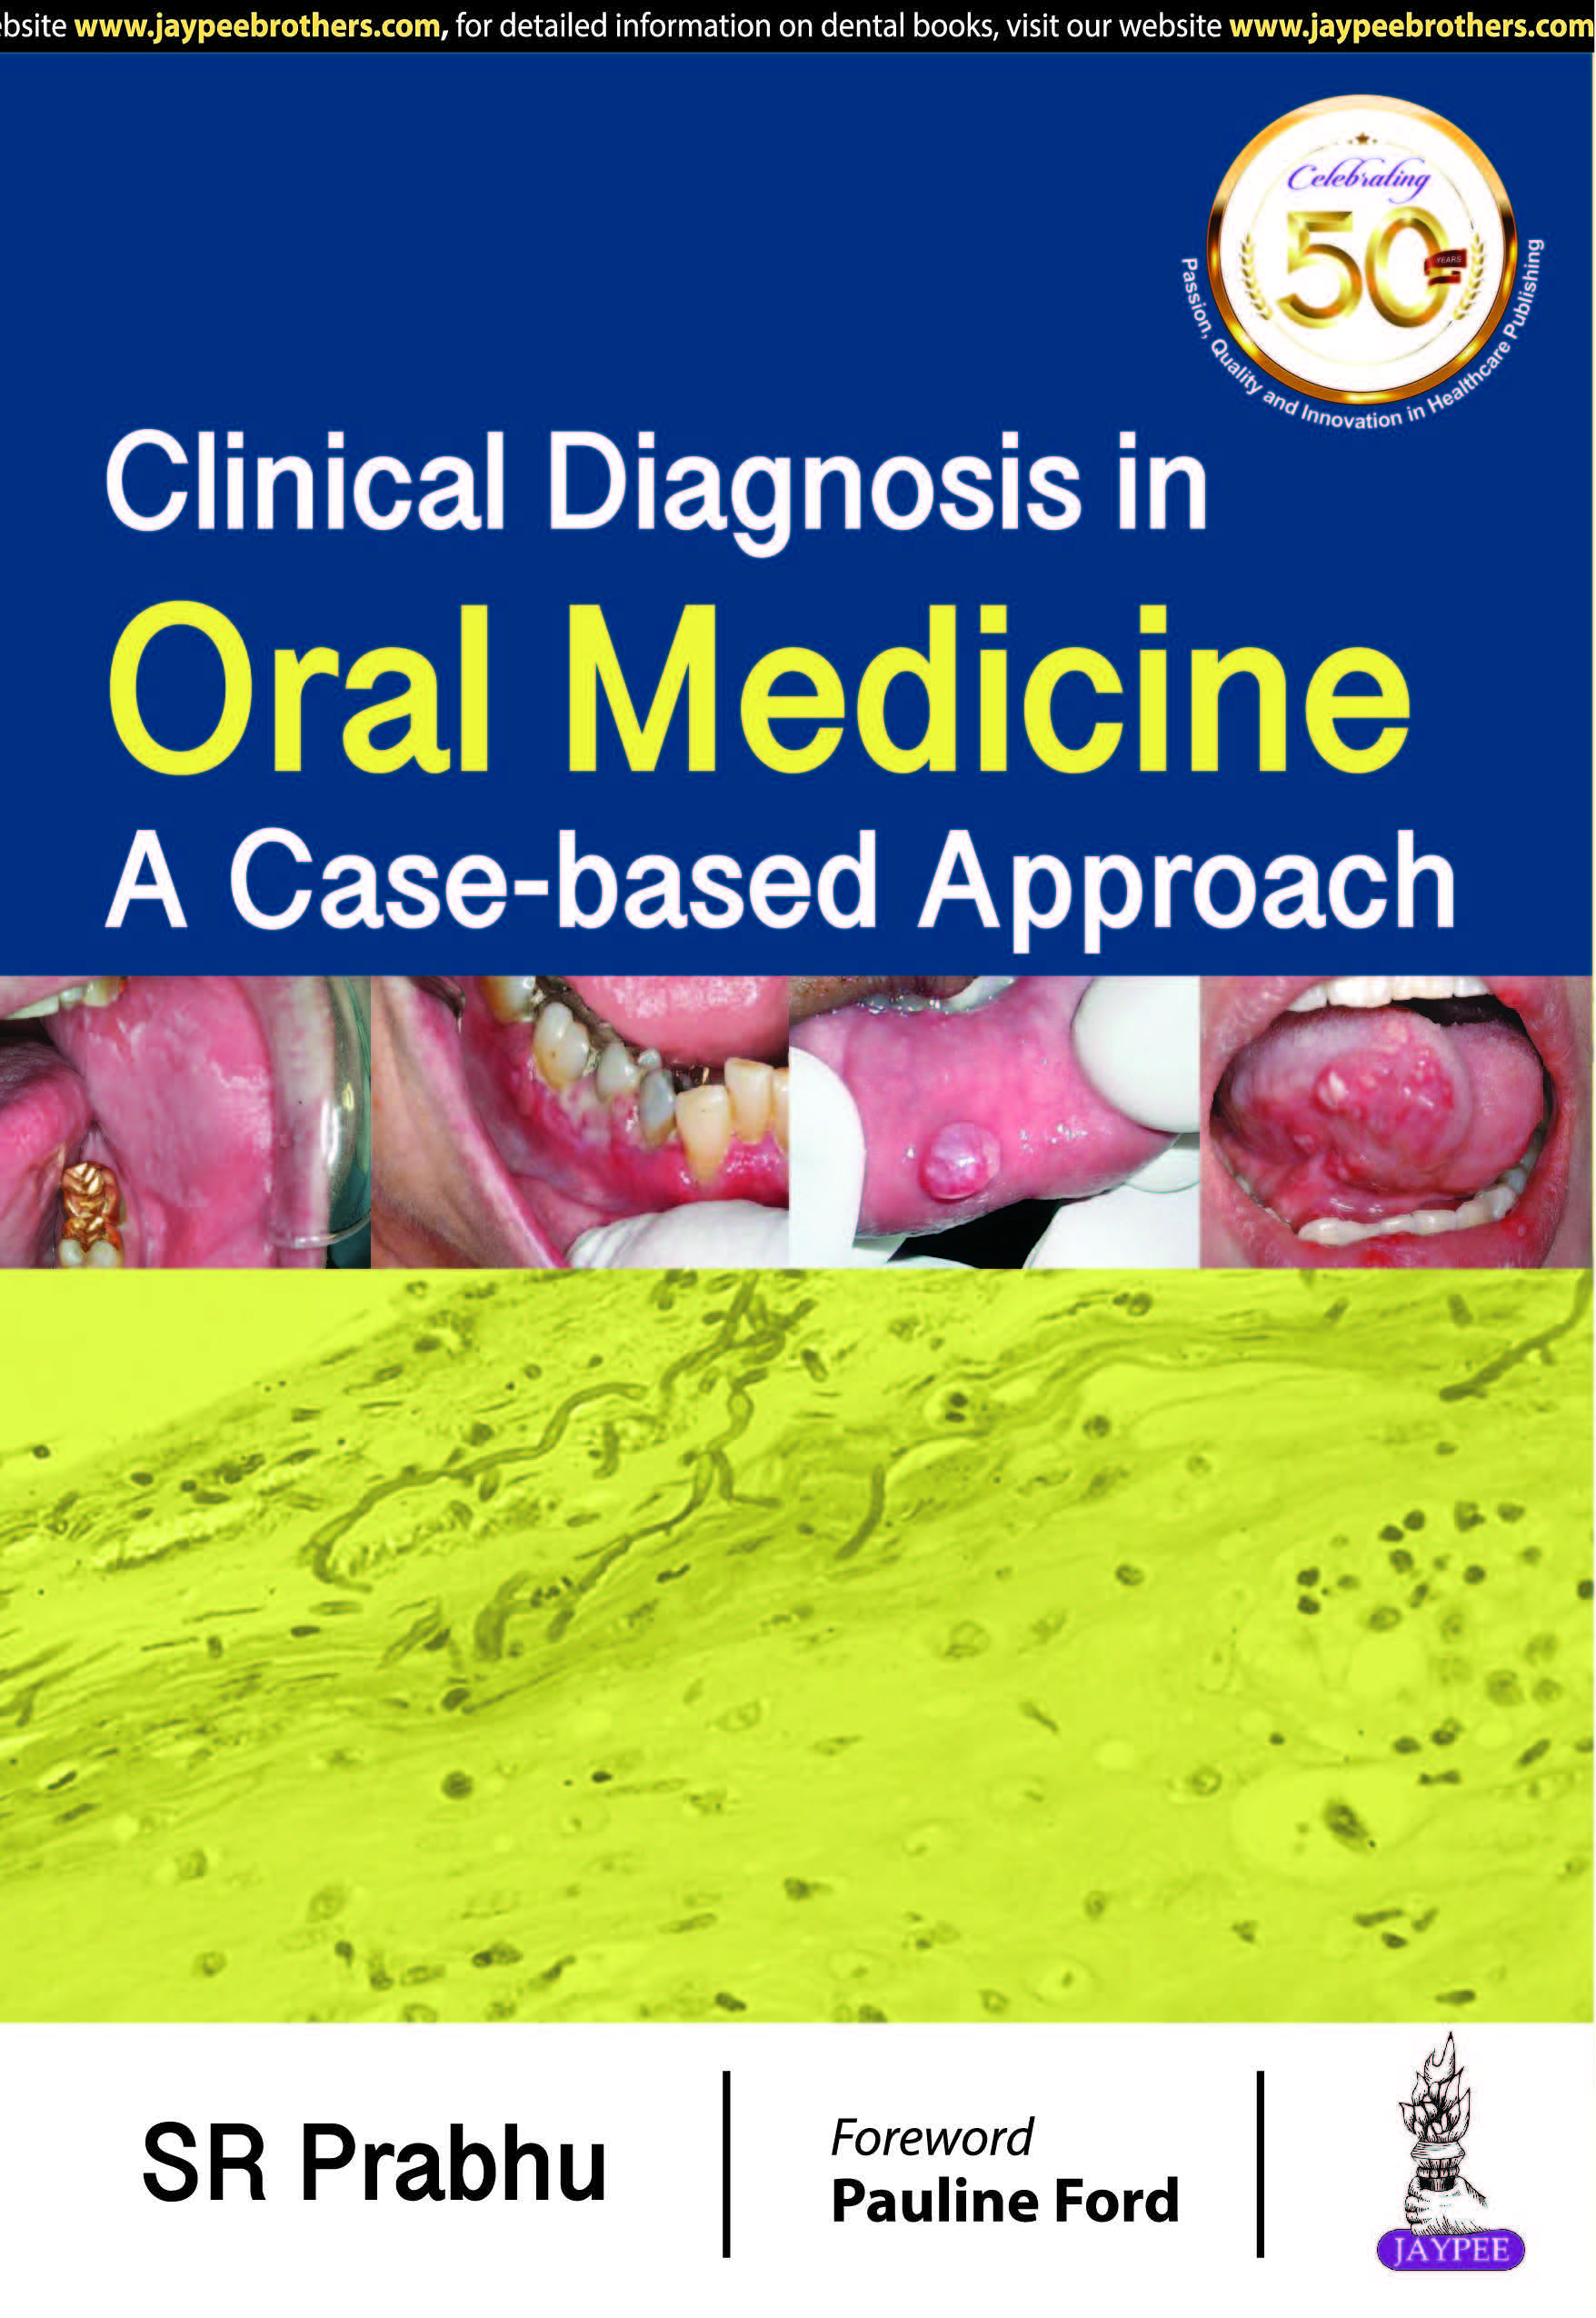 CLINICAL DIAGNOSIS IN ORAL MEDICINE: A CASE-BASED APPROACH
,1/E,SR PRABHU